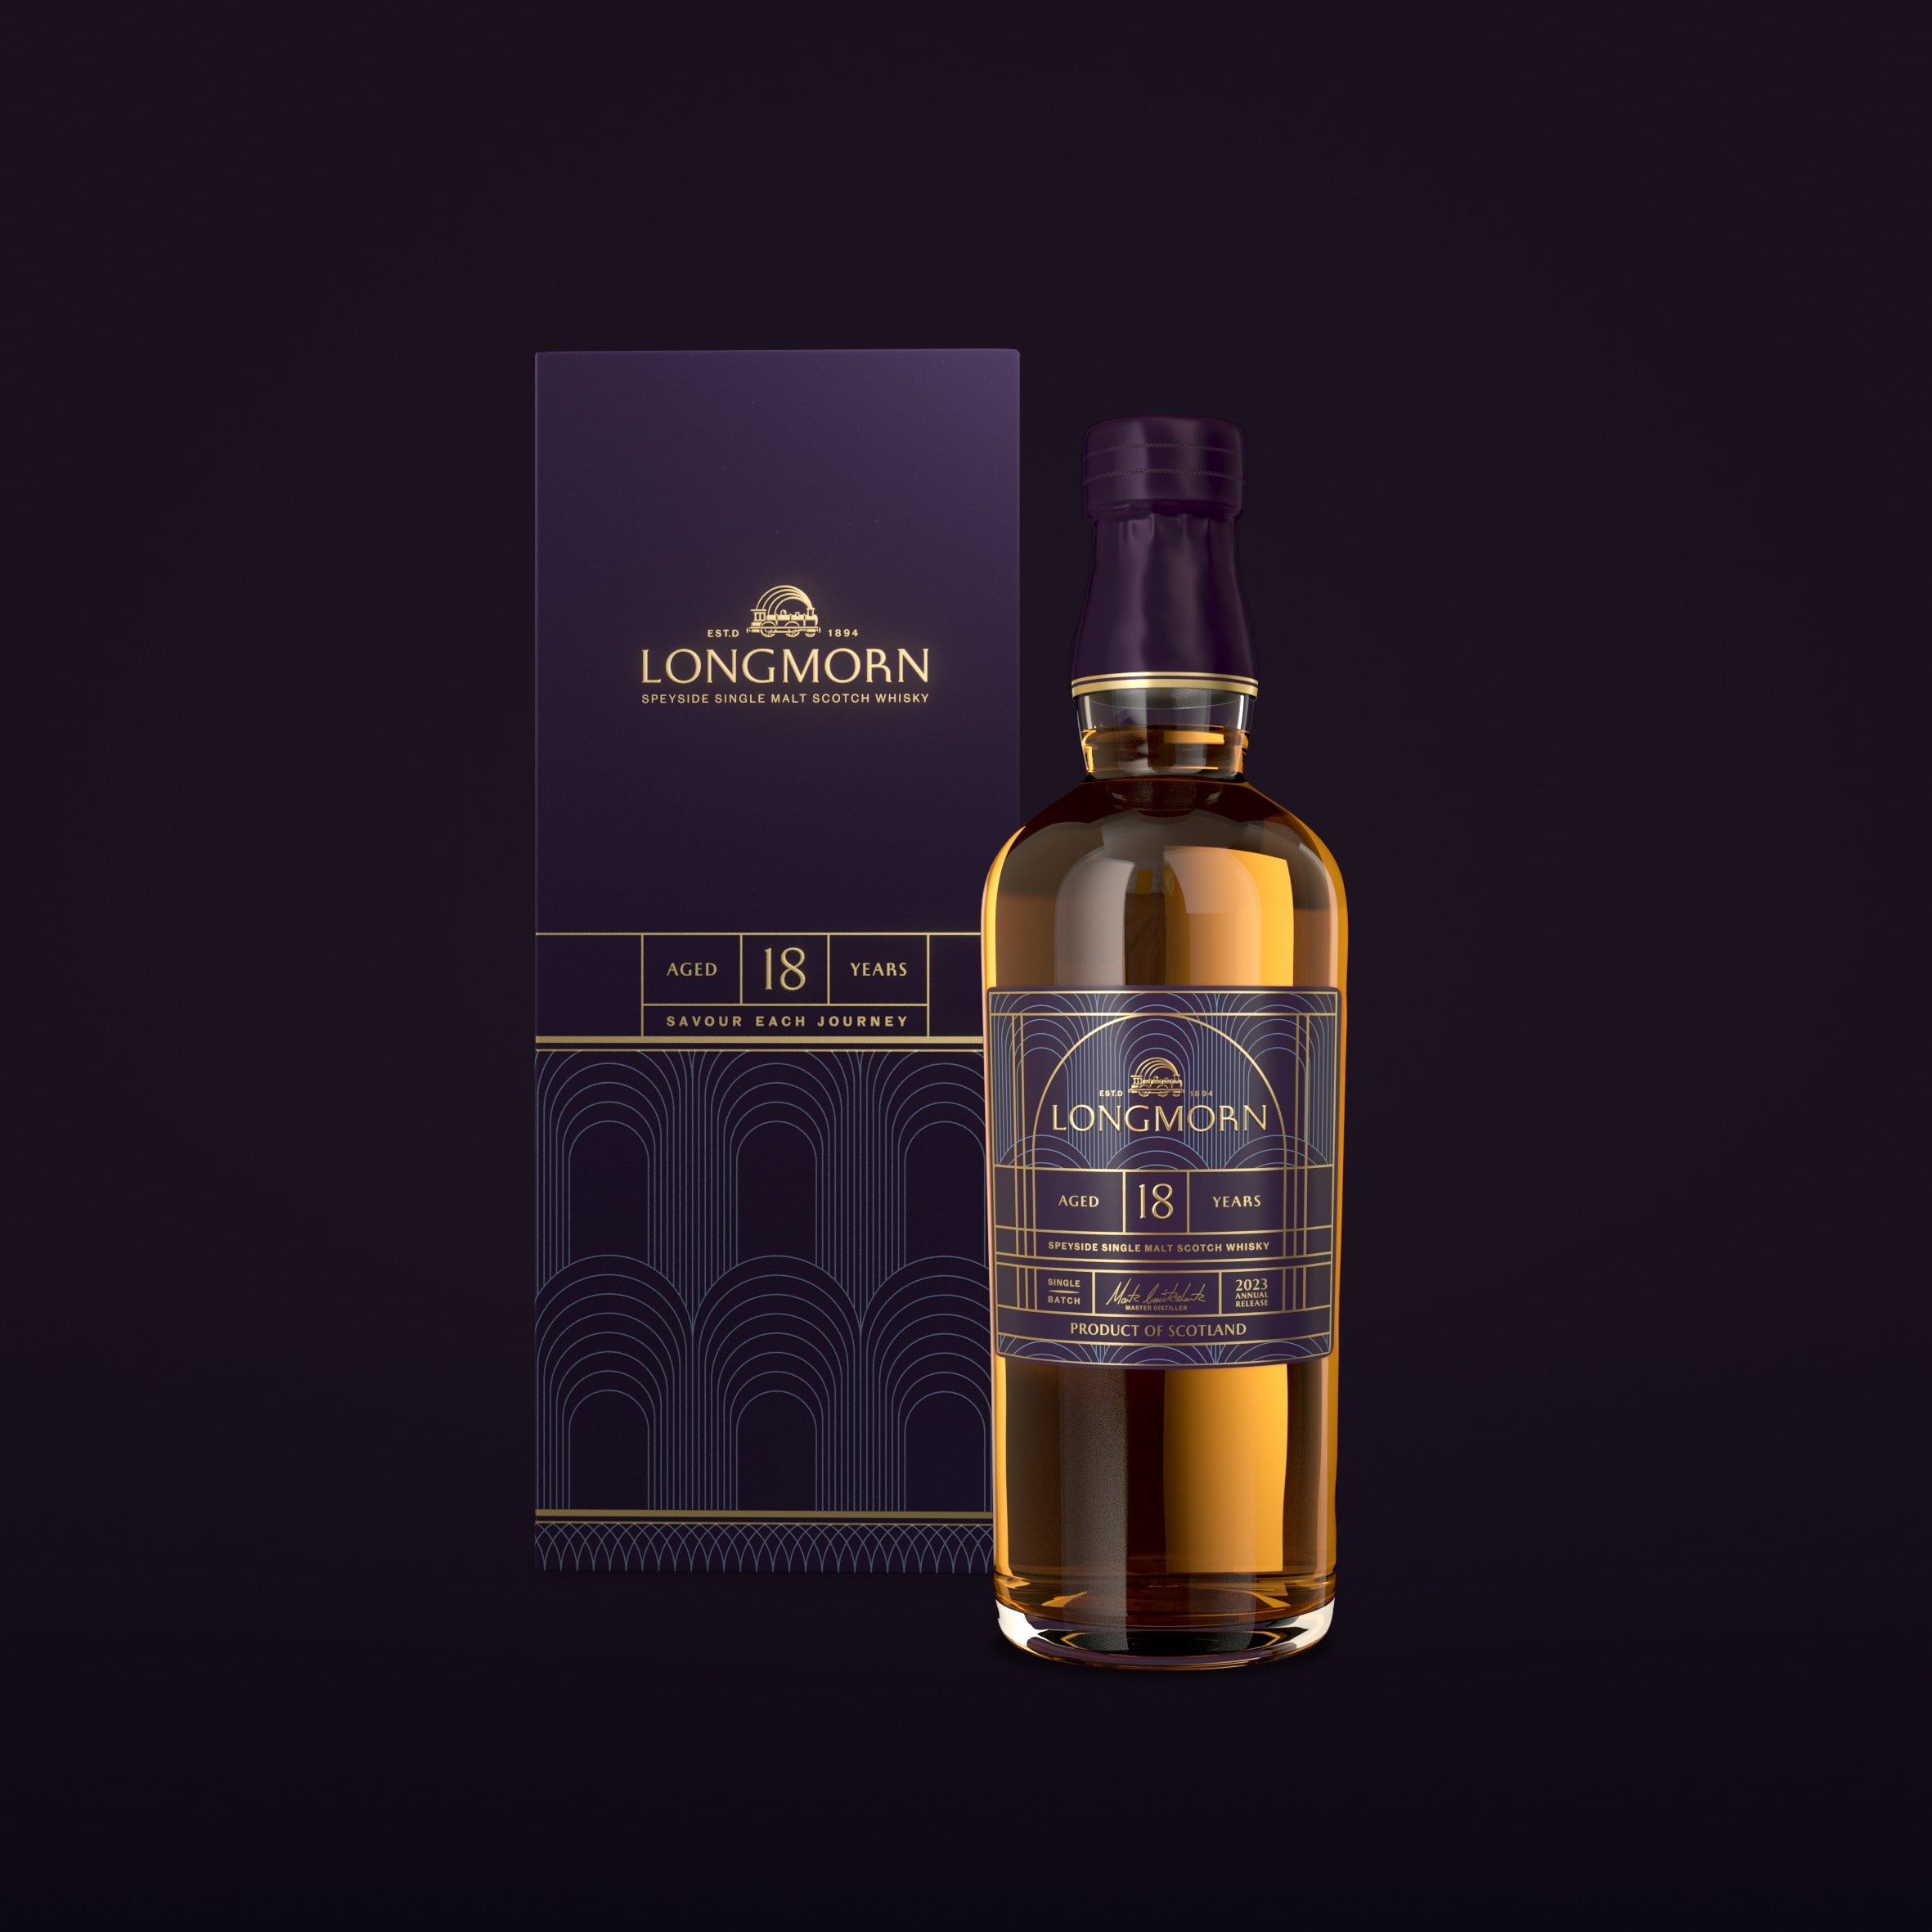 Longmorn Scotch Whisky 18 Year Old